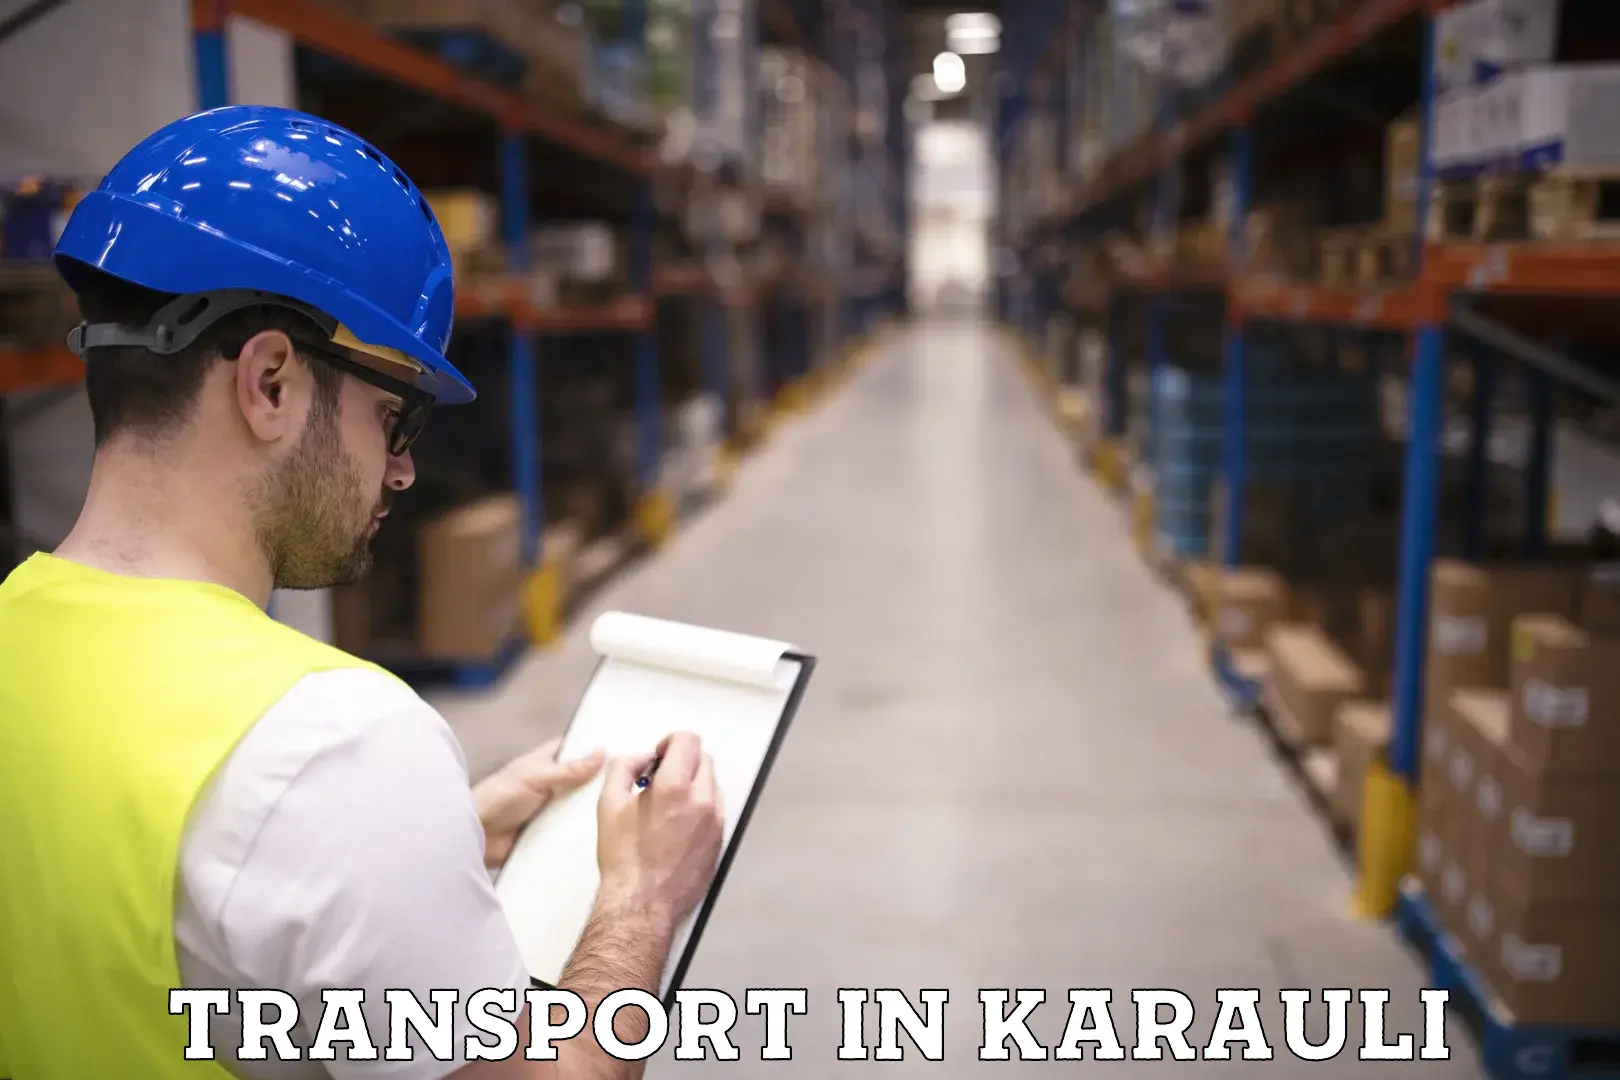 Nearest transport service in Karauli